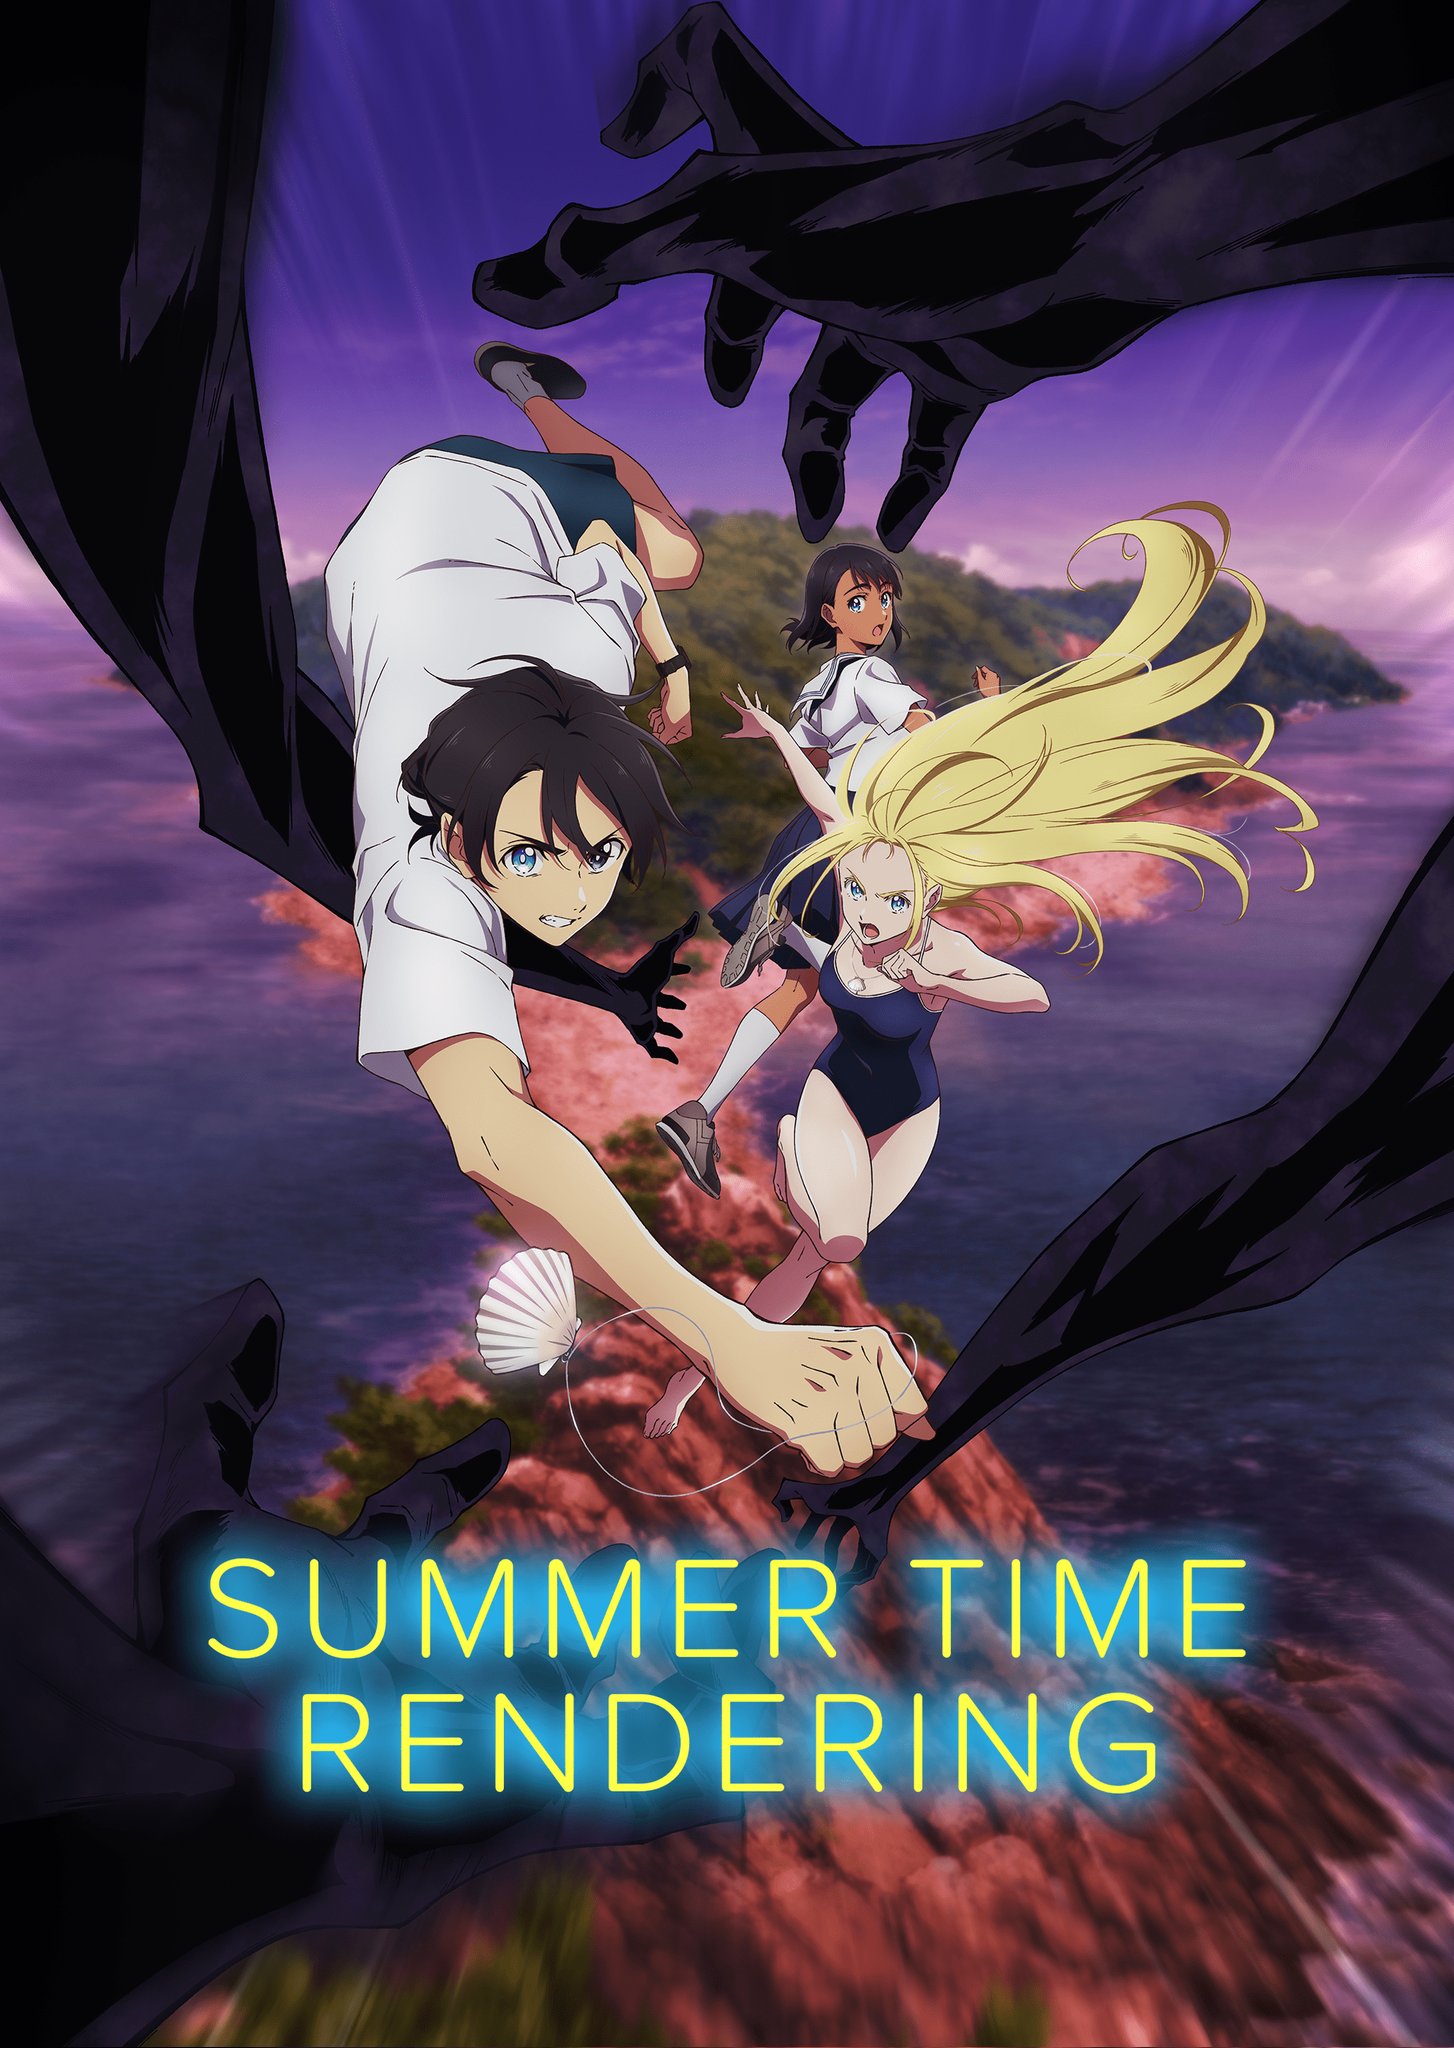 Summer Time Render, vol. 2 by Yasuki Tanaka